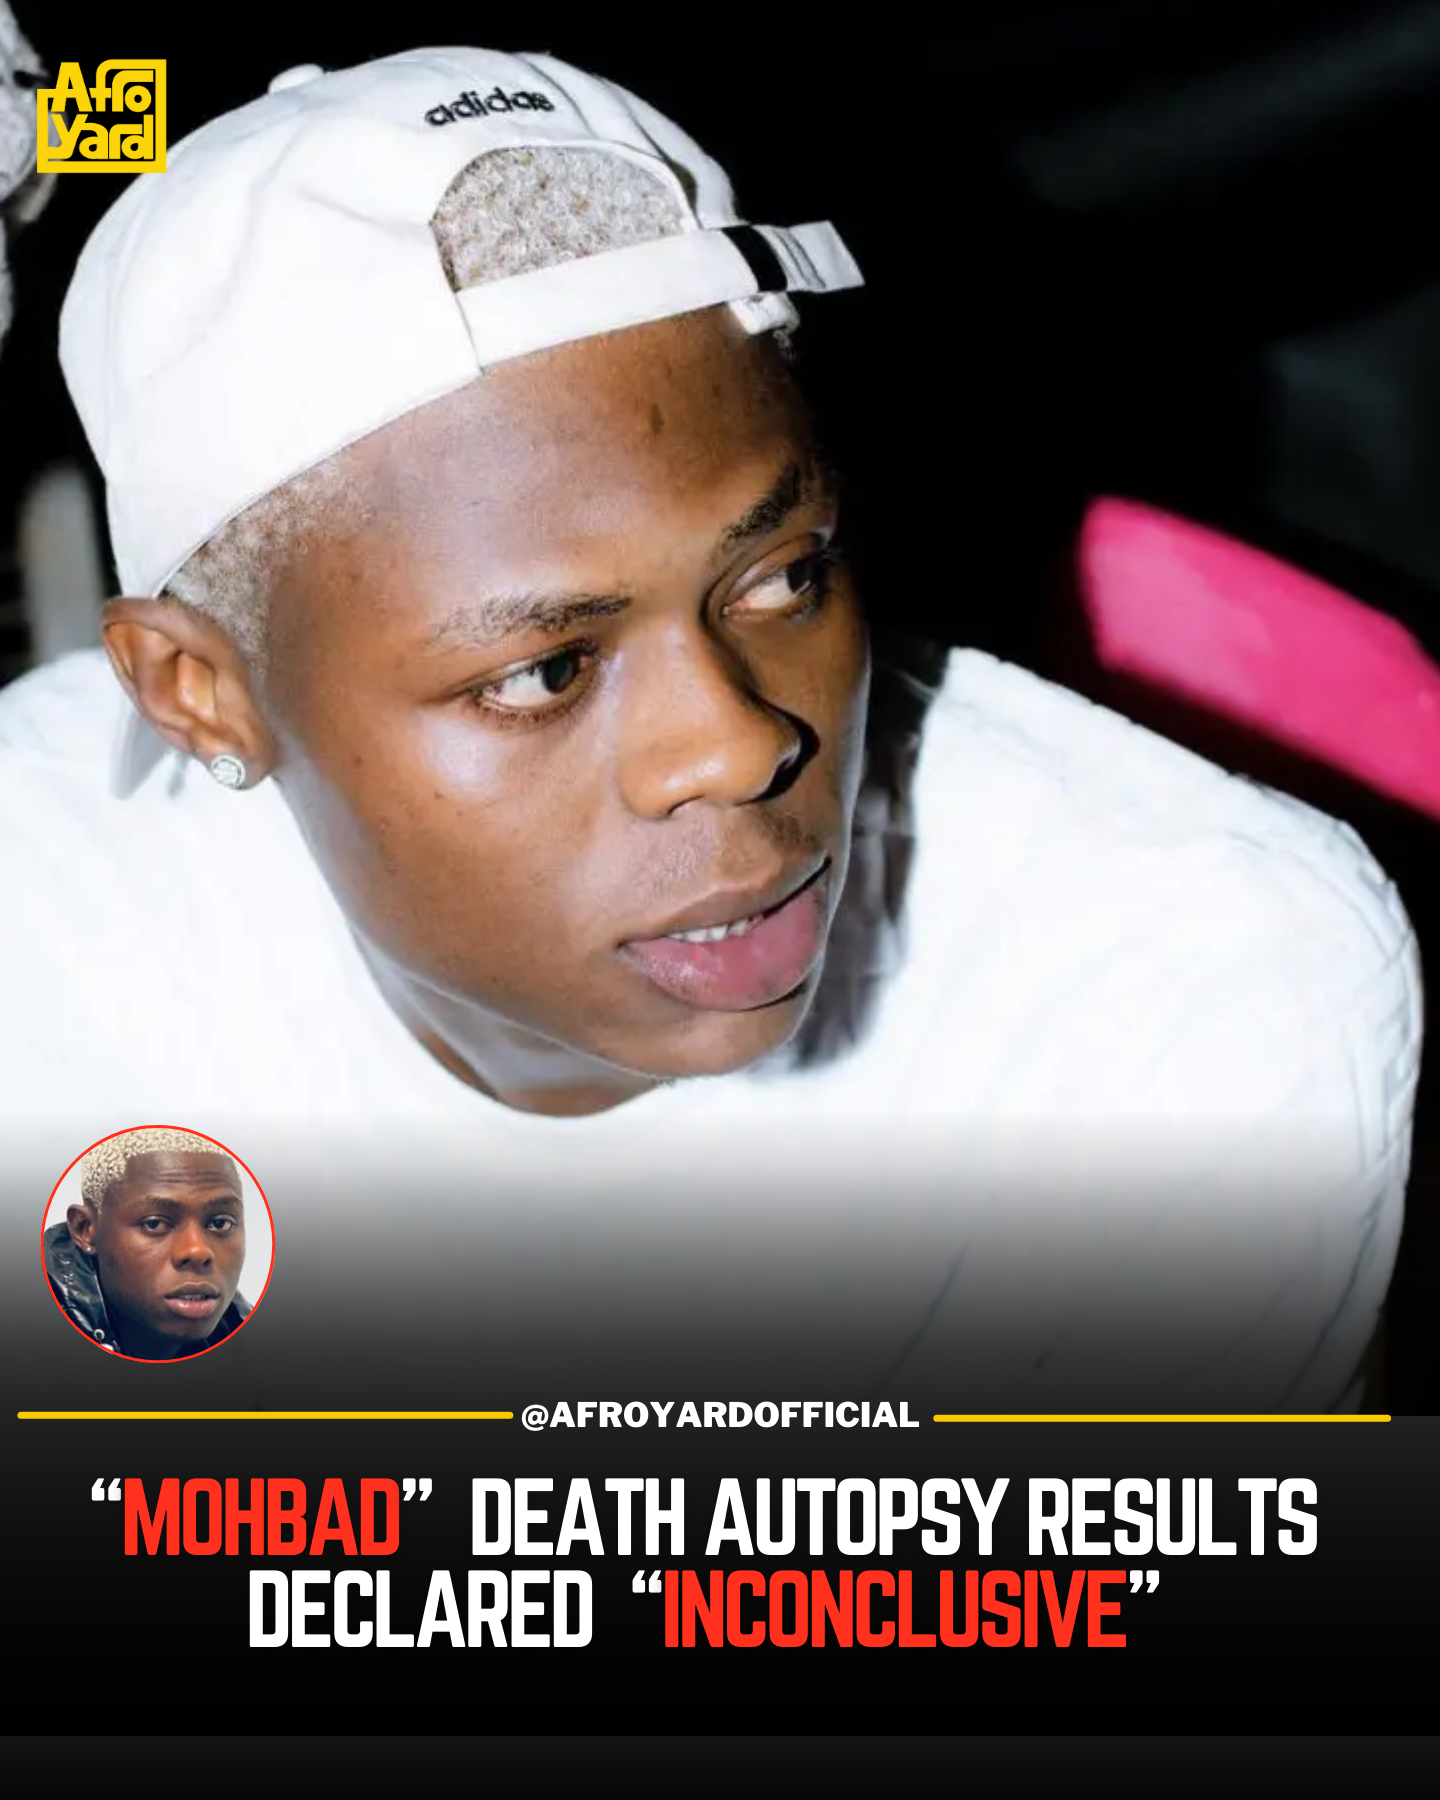 Mohbad’s Death Autopsy Results Declared Inconclusive